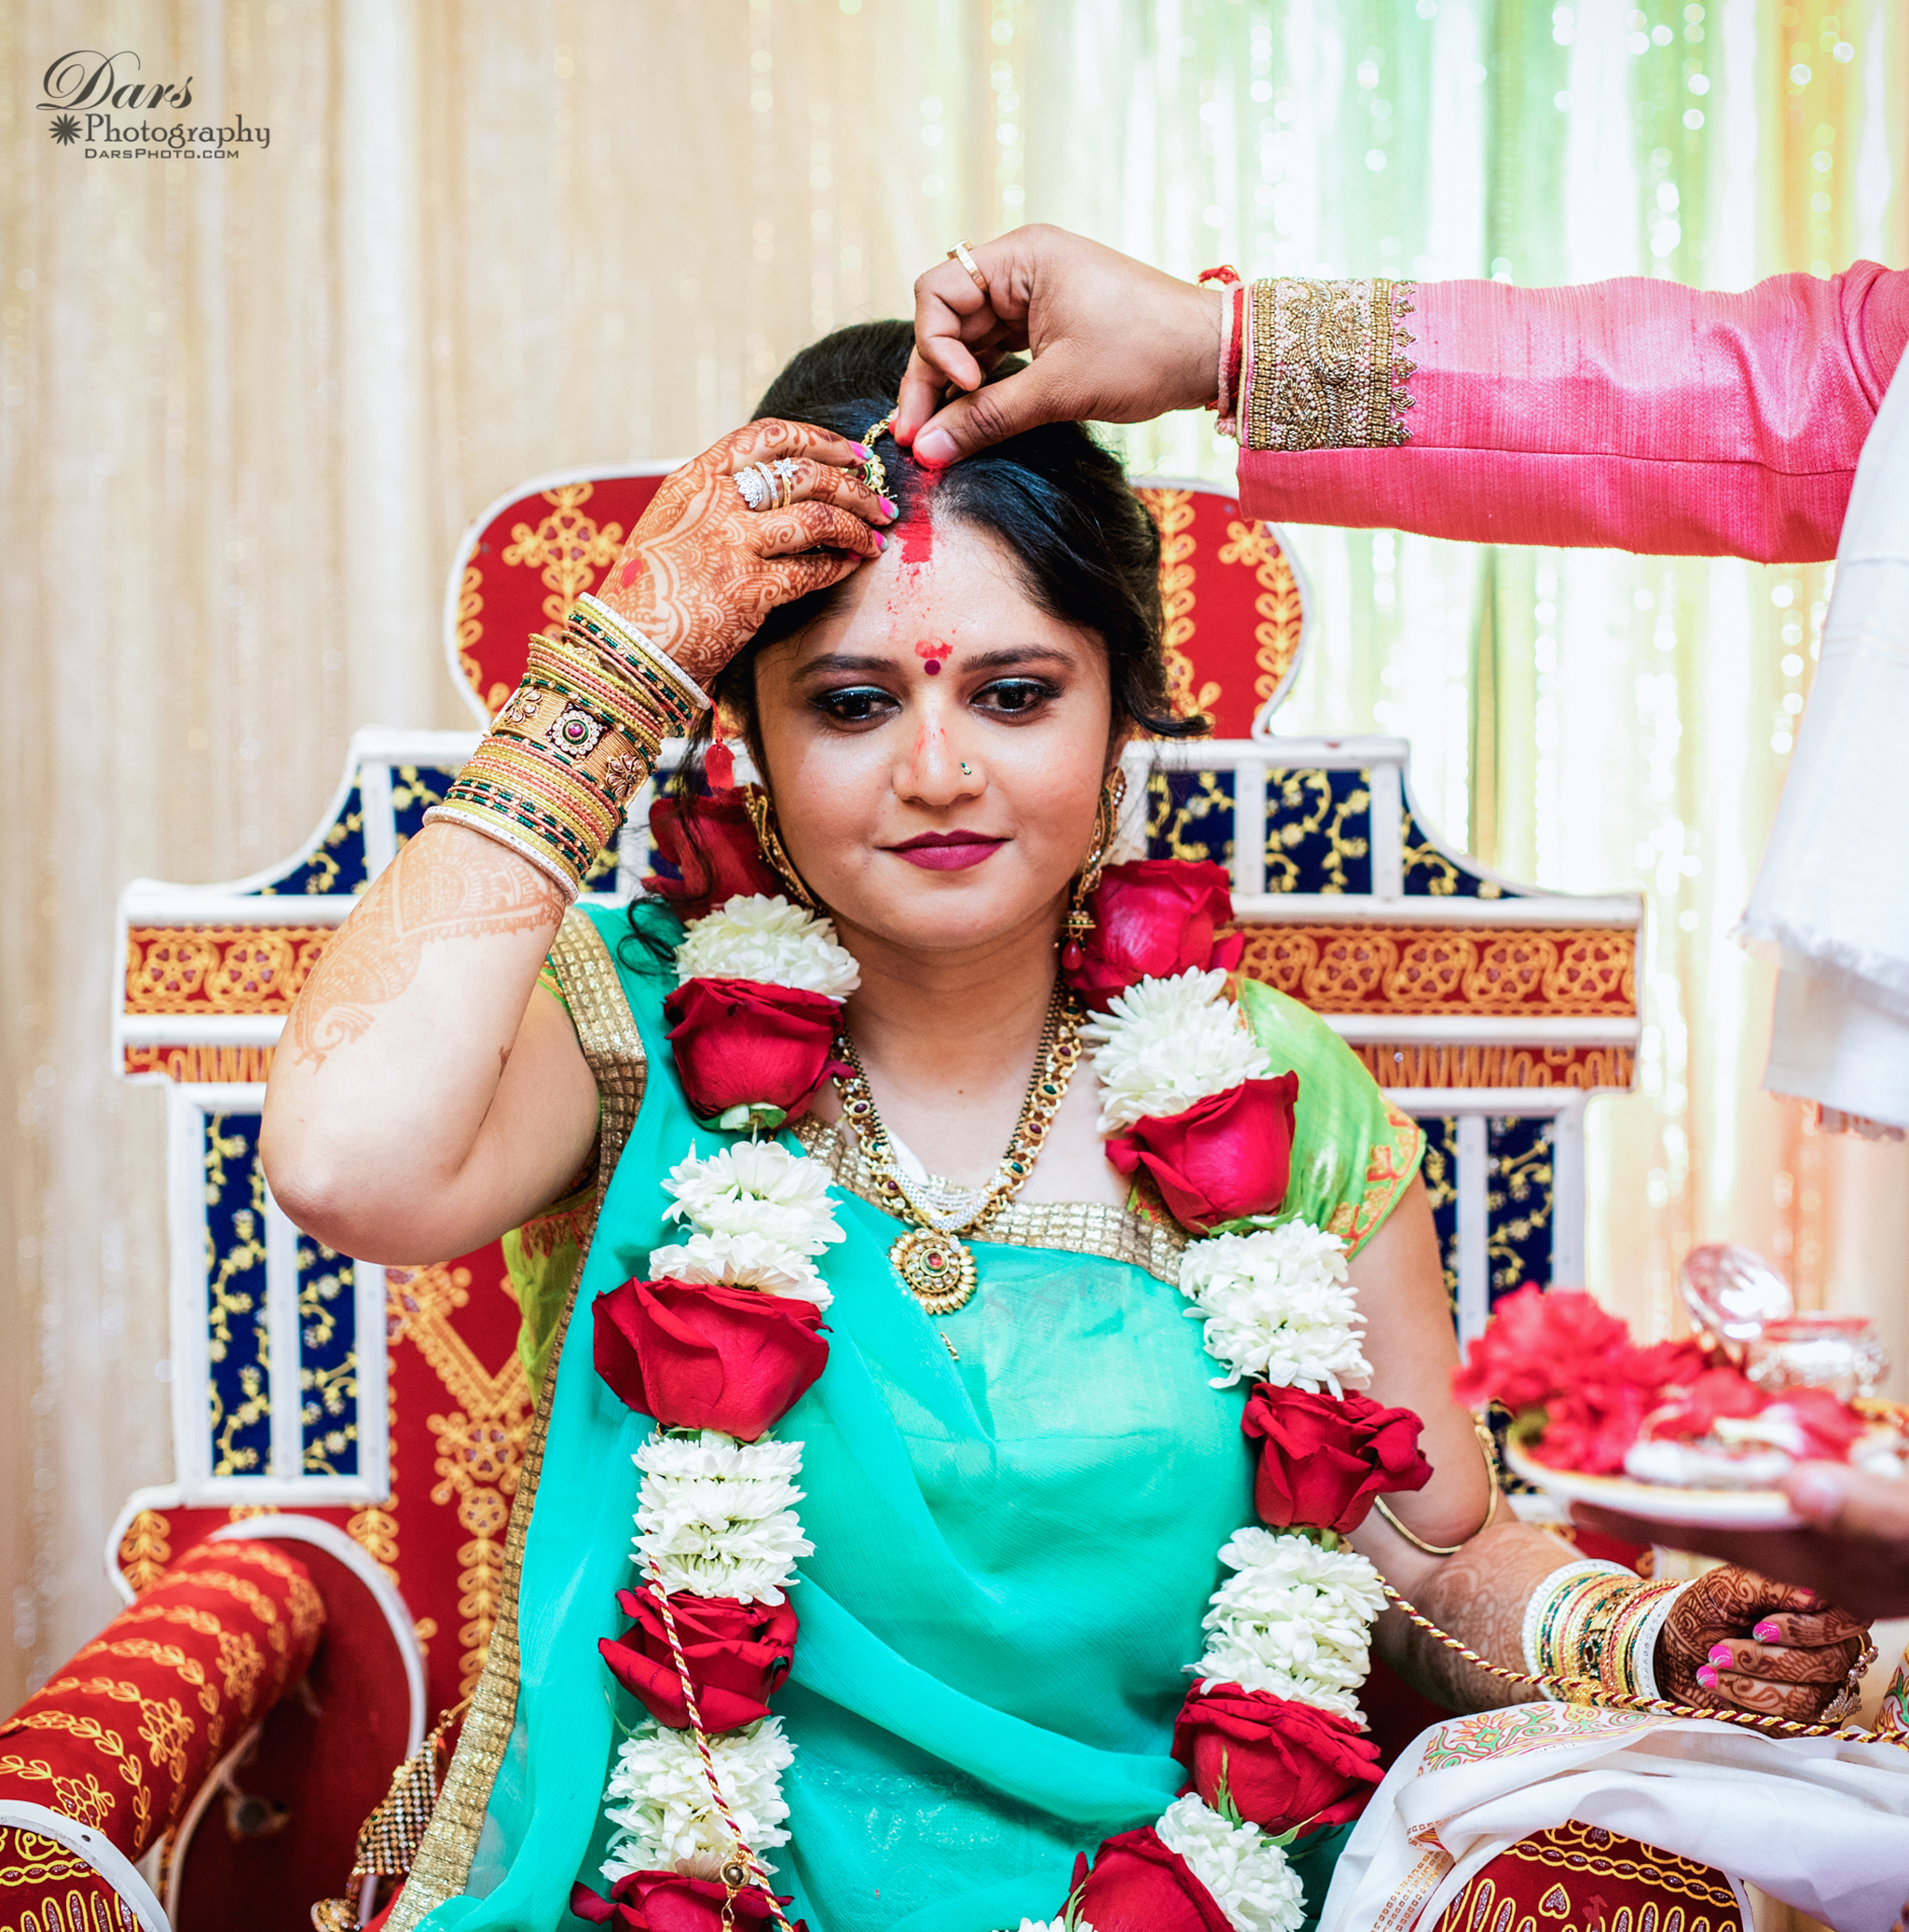 Gujarati Wedding 74 Dars Photography